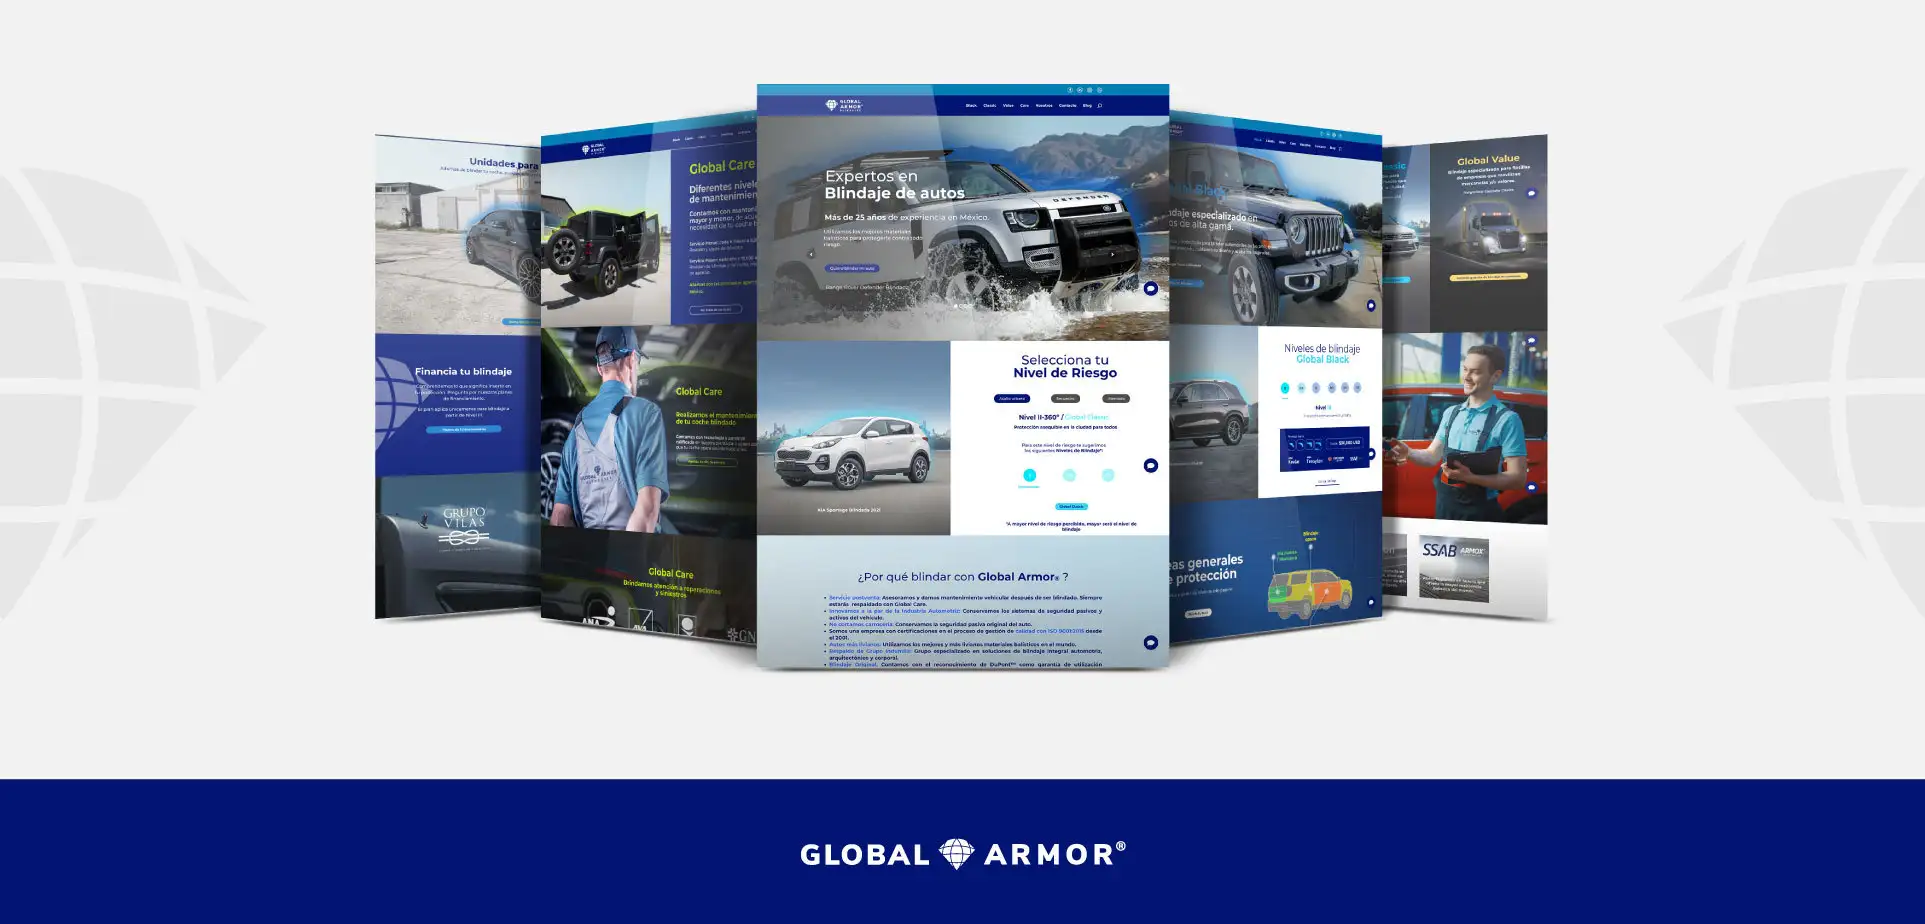 Global Armor,Marketing digital,Estrategias,Posicionamiento,Aumento de ventas